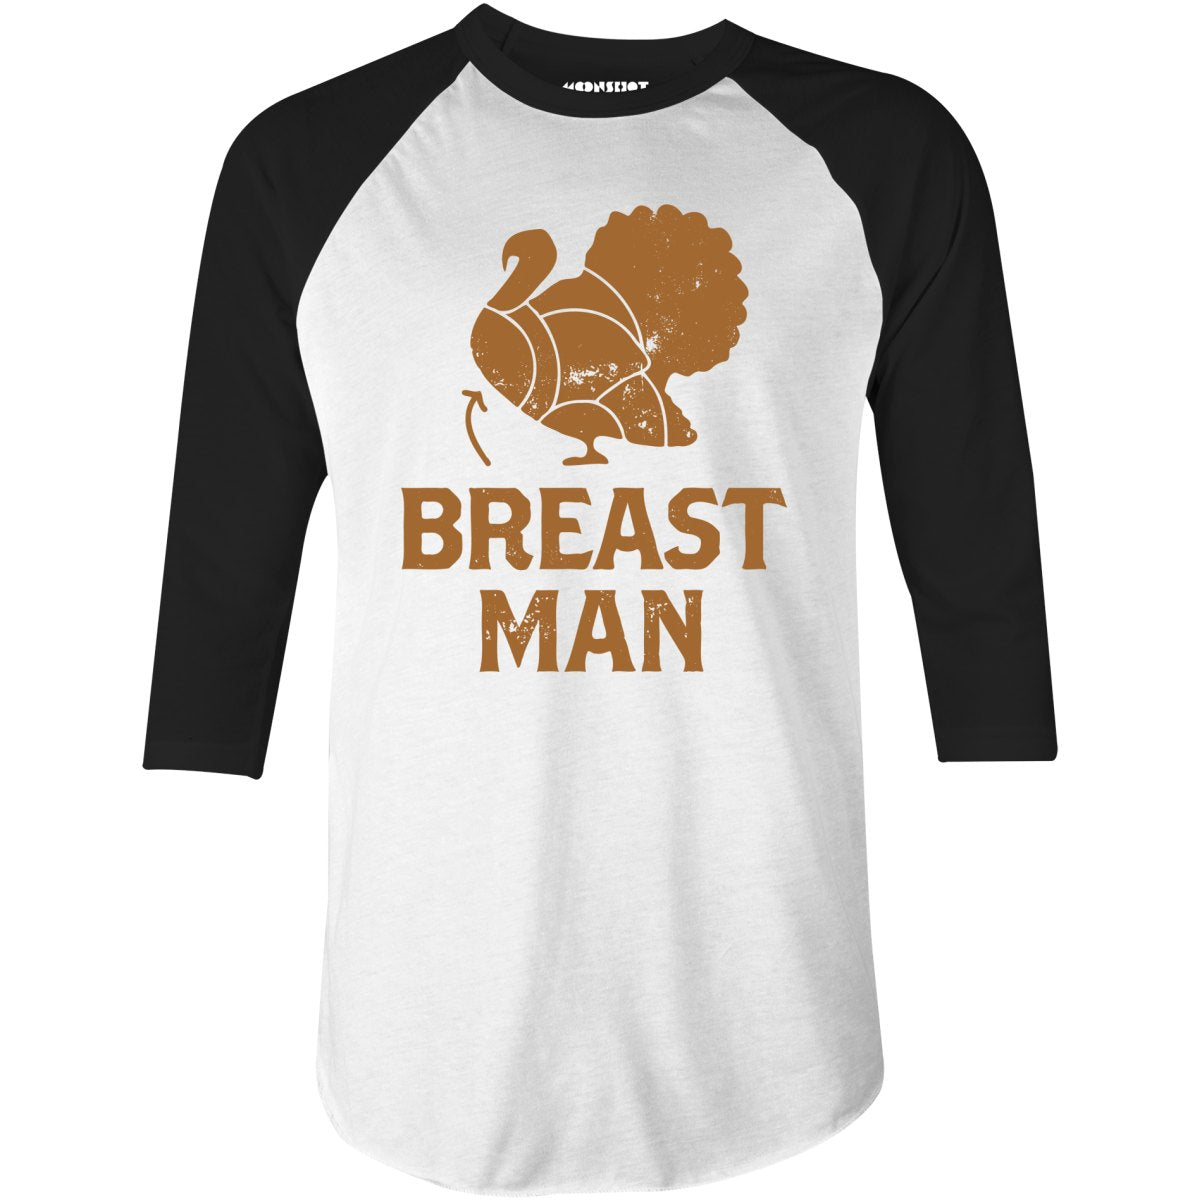 Breast Man - 3/4 Sleeve Raglan T-Shirt